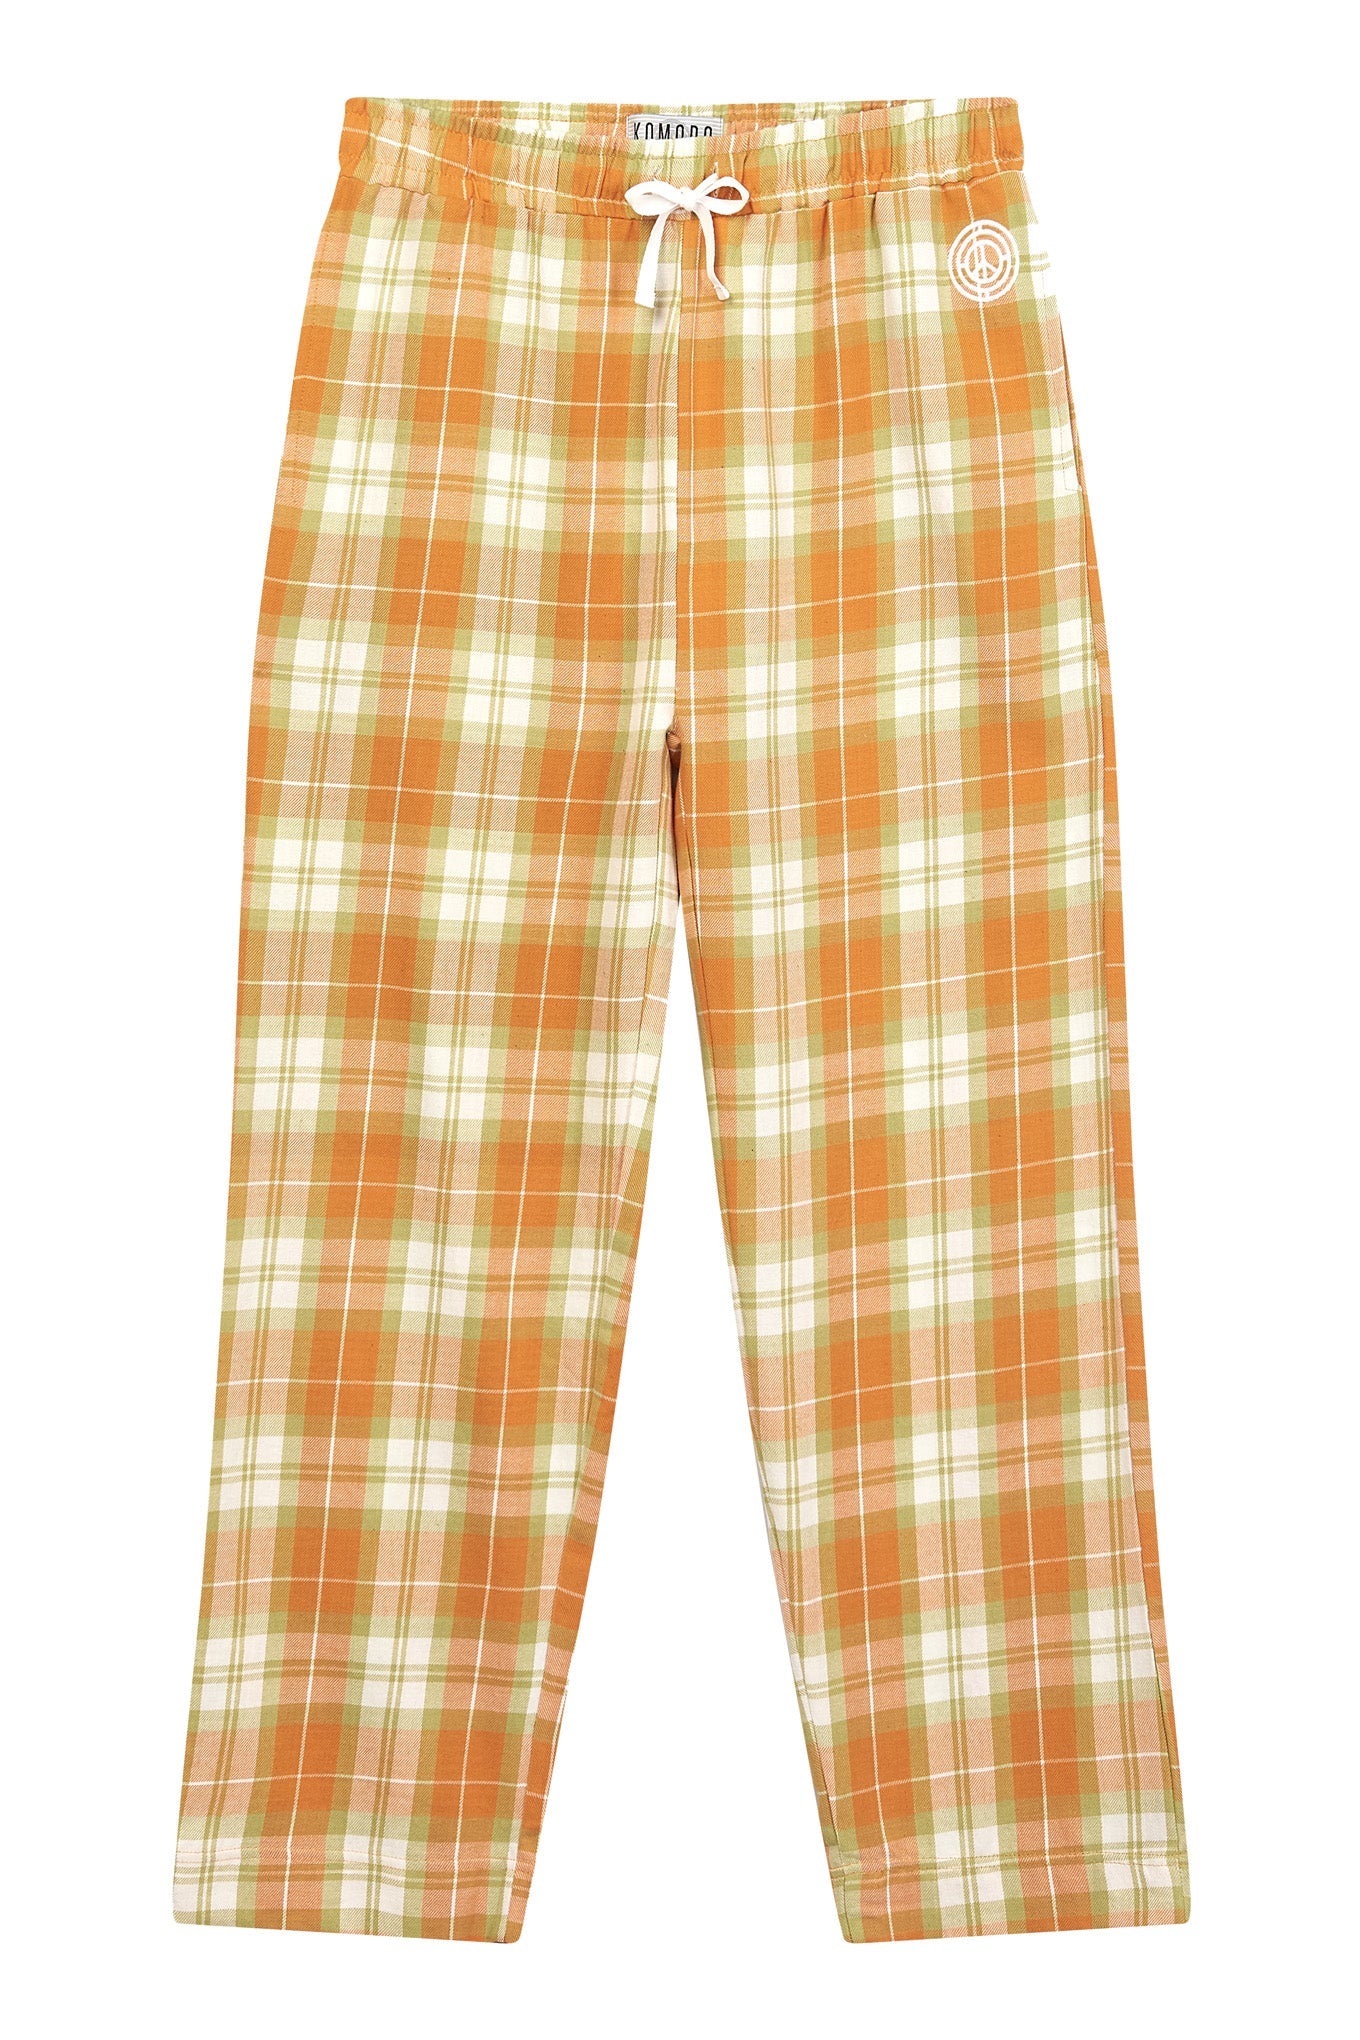 Jim Jam Womens Pyjama Bottoms Orange